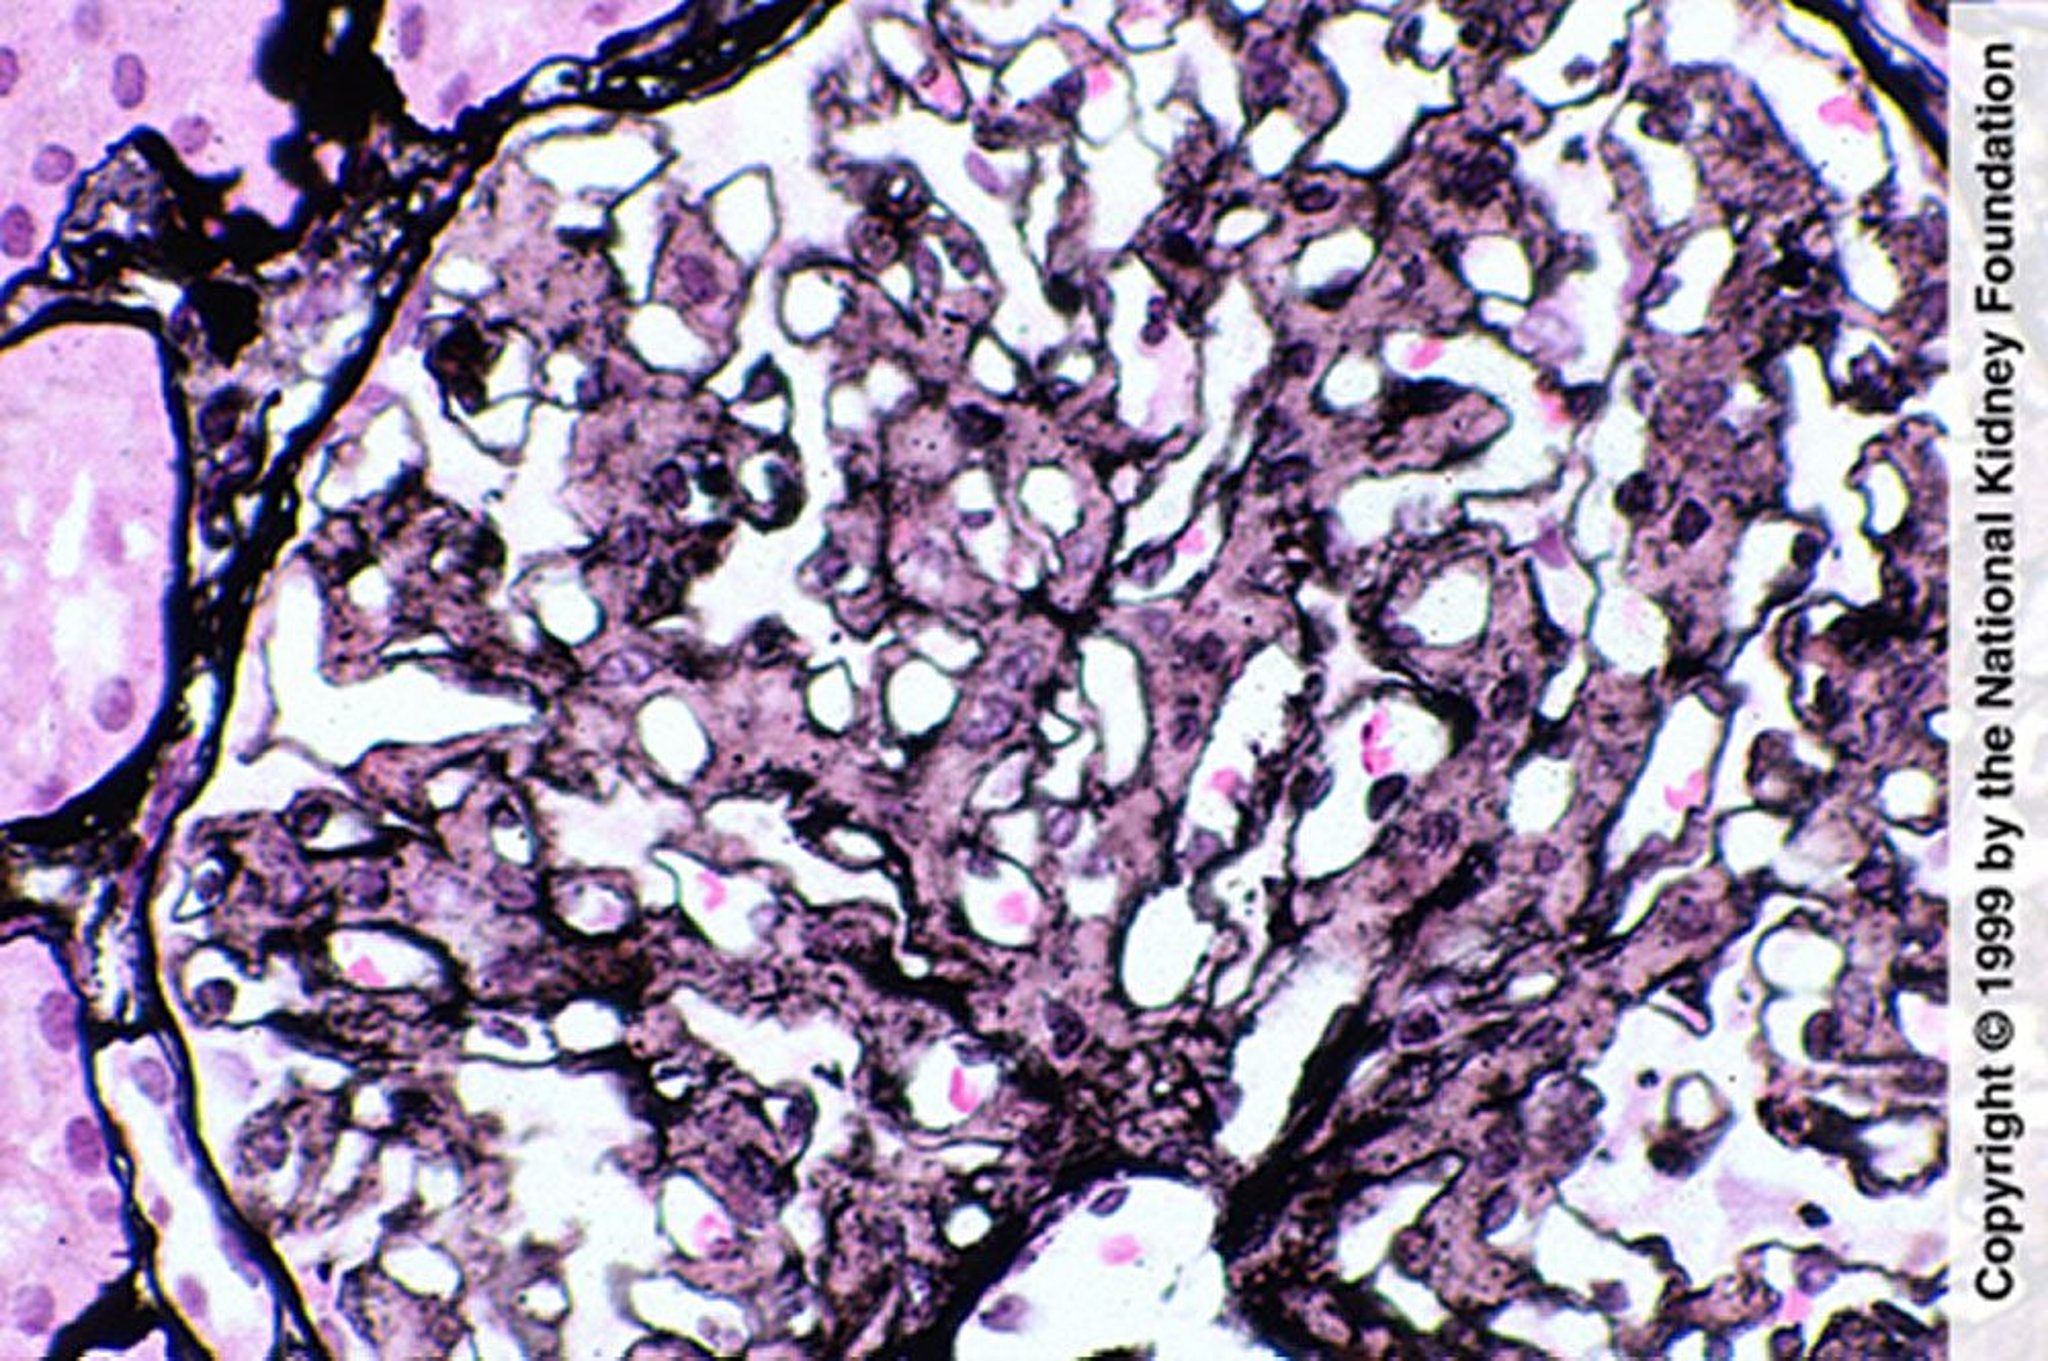 Glomerulopatia fibrillare (proliferazione mesangiale)